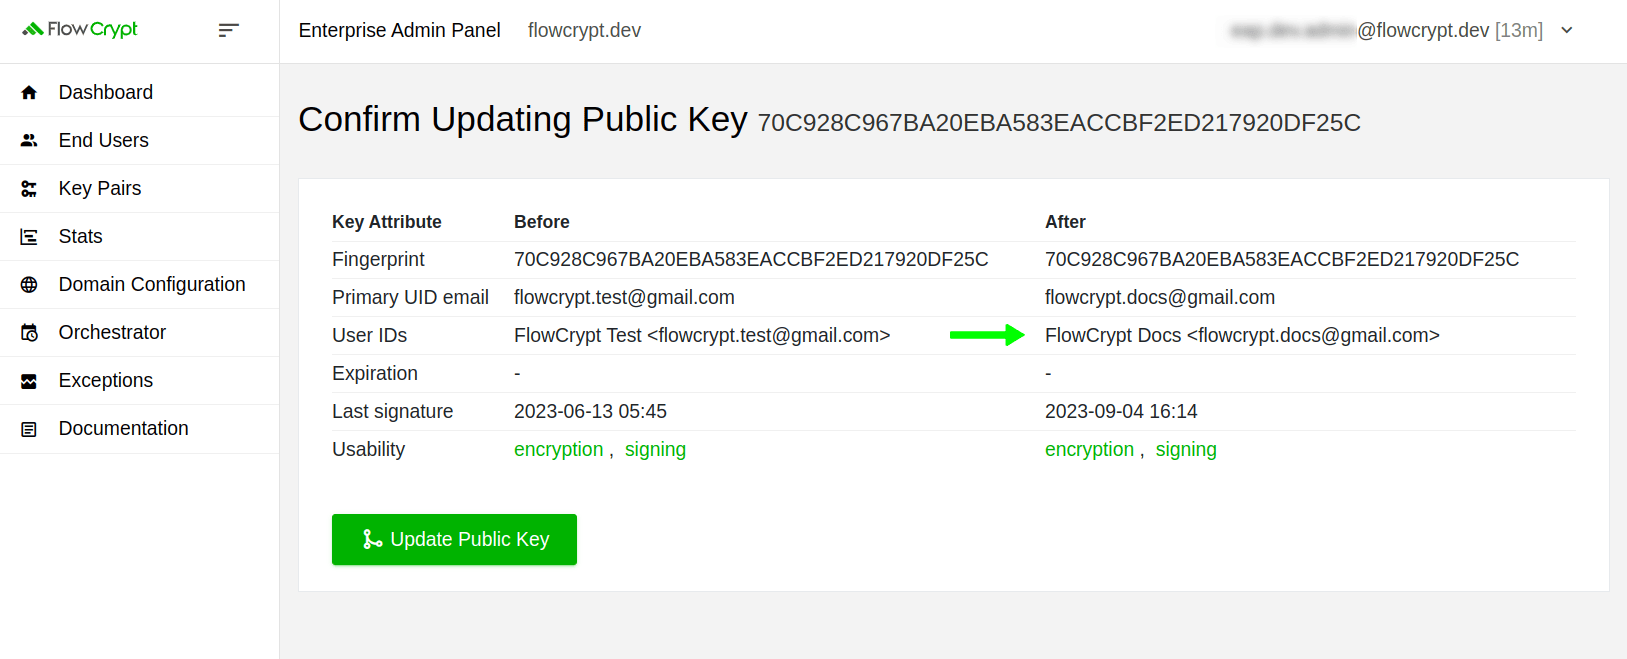 enterprise eap usage key pairs public key update confirm updating public key